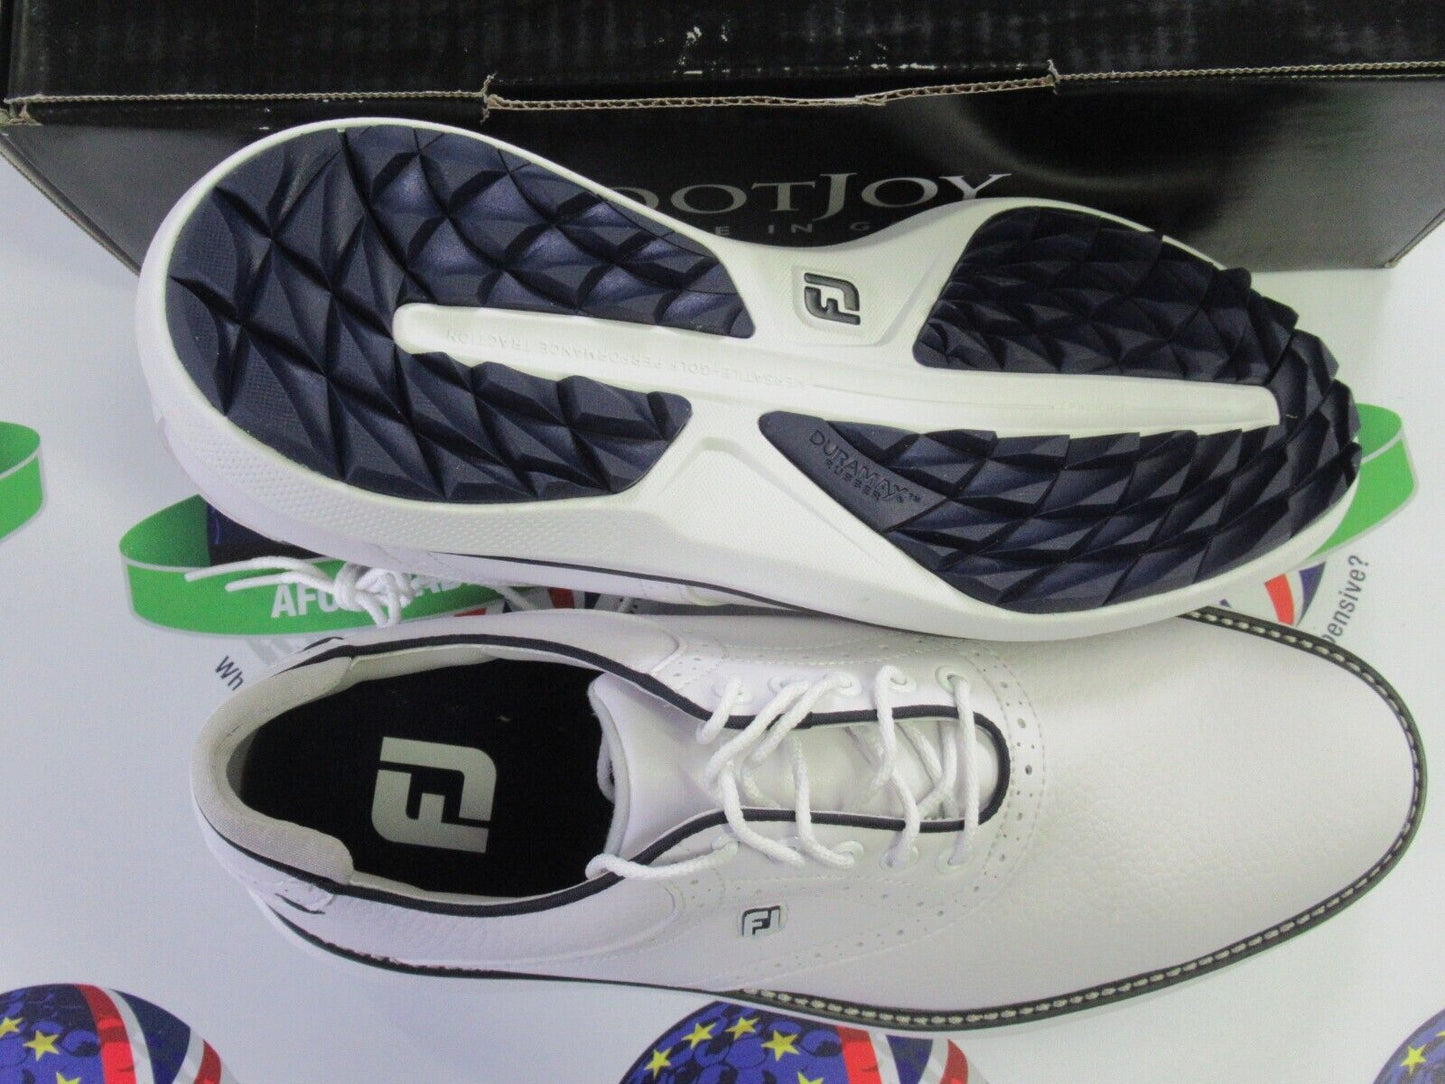 footjoy traditions waterproof golf shoes 57927k white uk size 10.5 medium